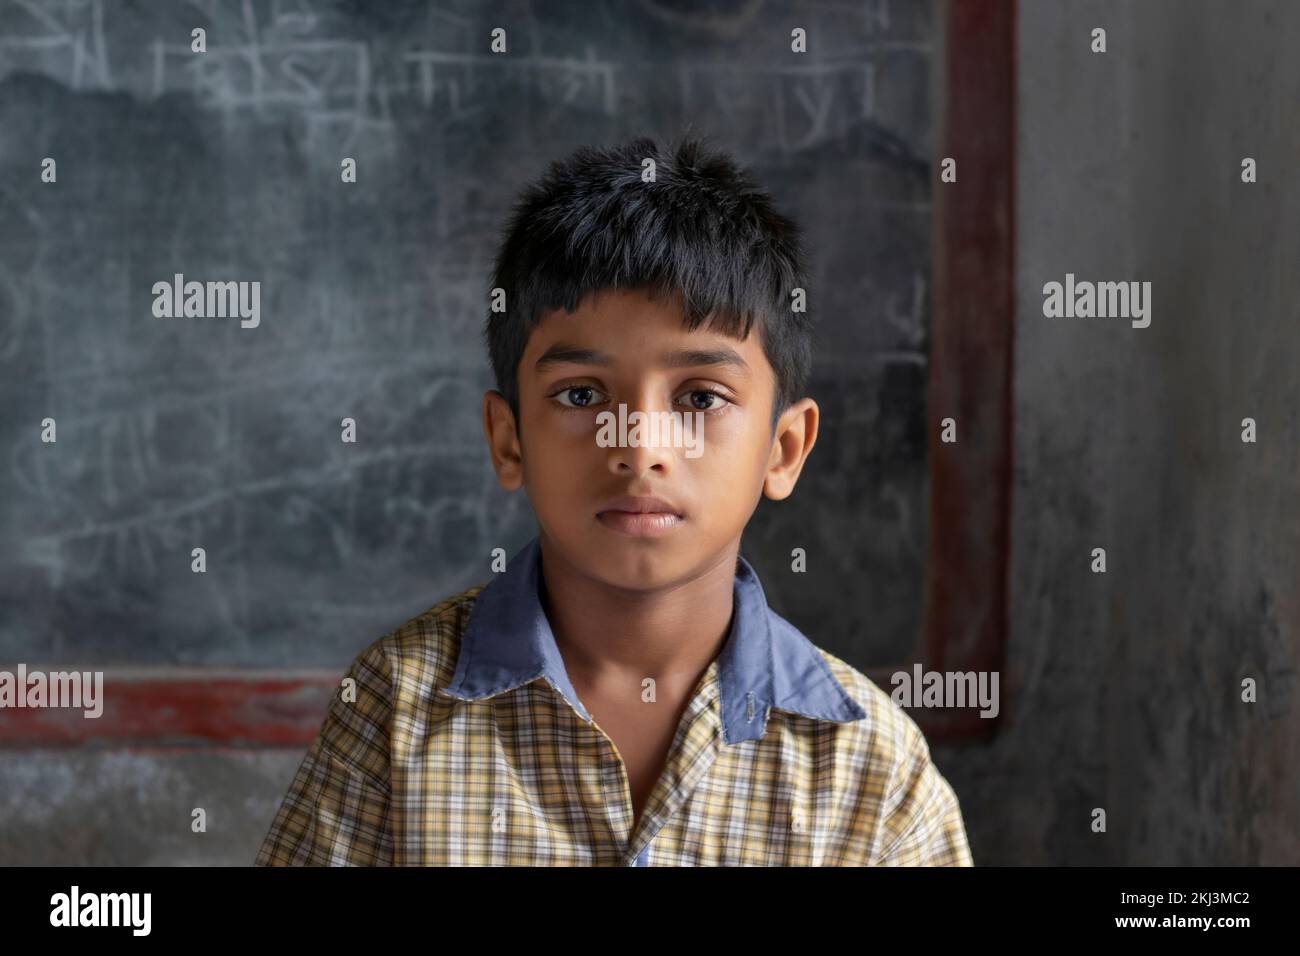 A Small School Boy Sitting in Classroom Stock Photo